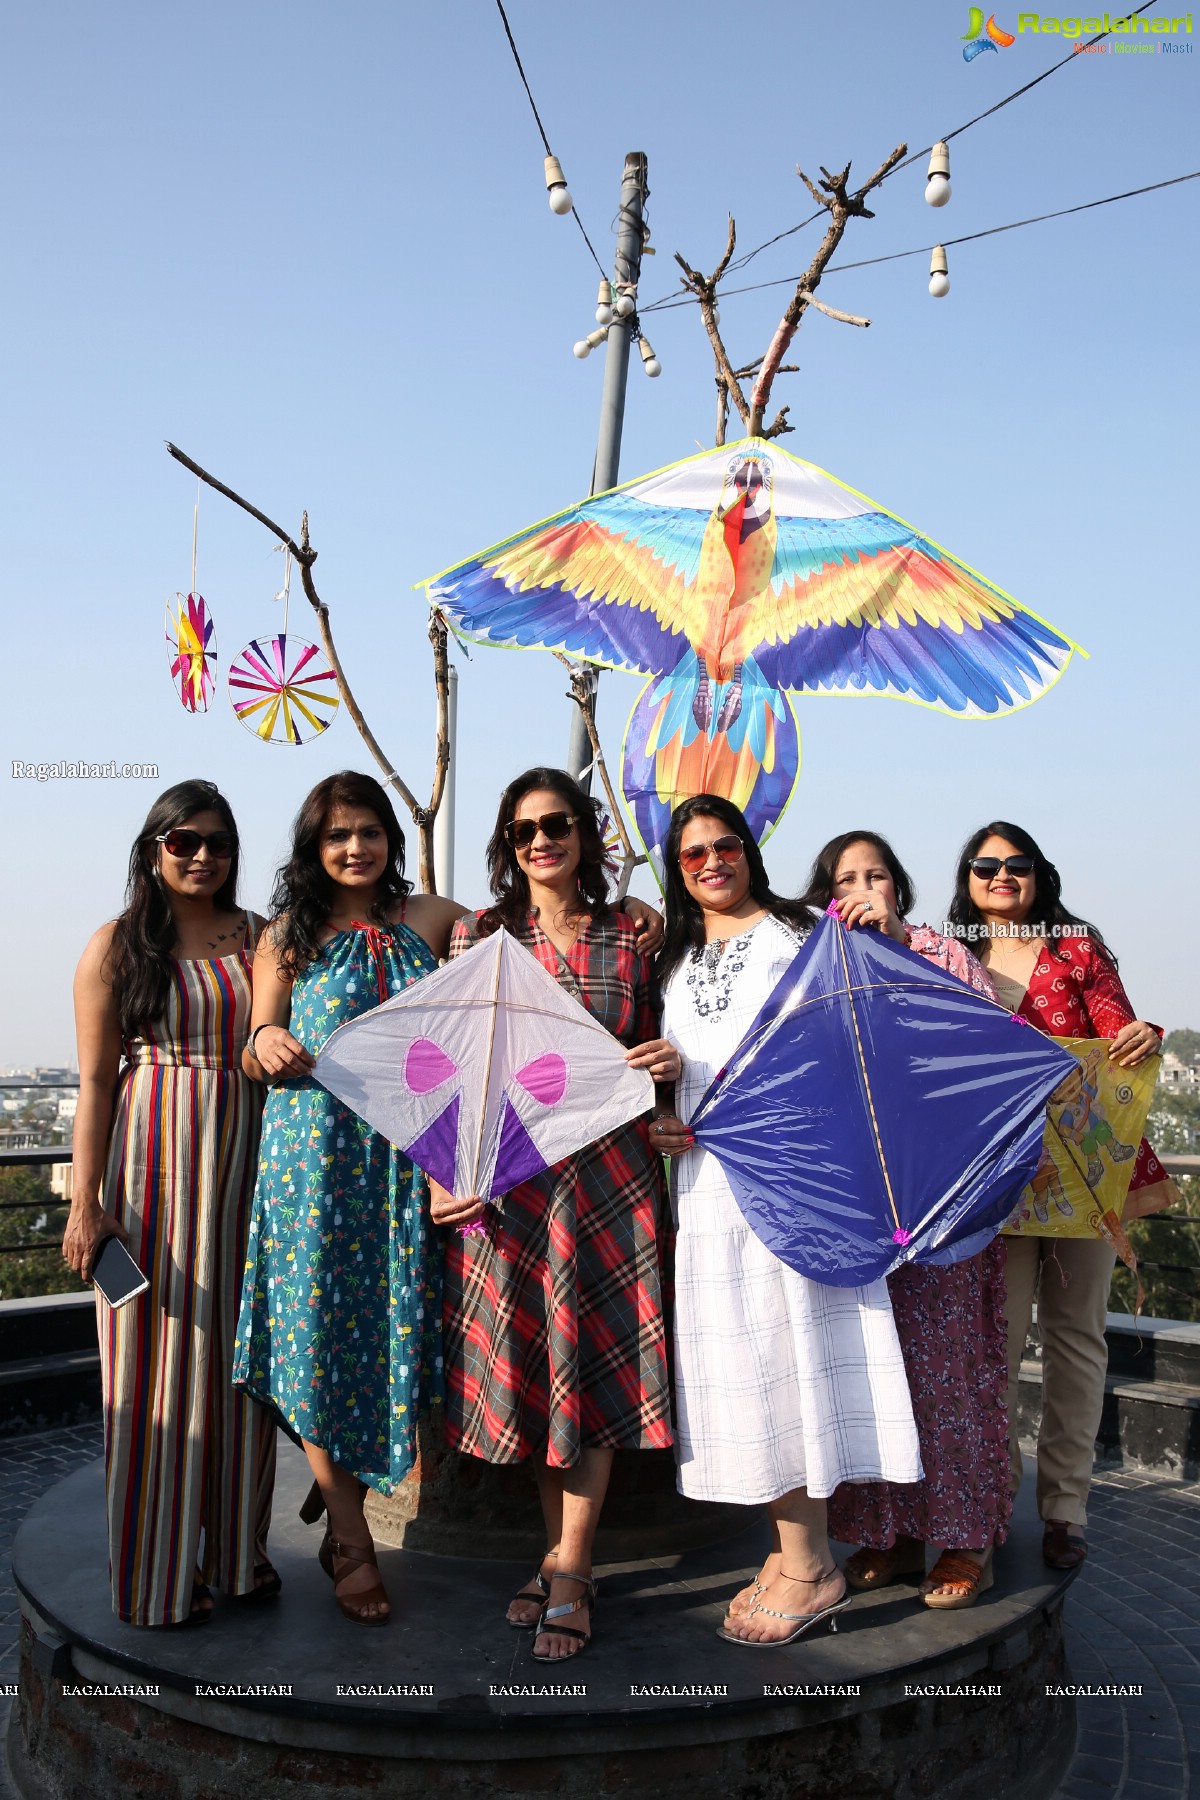 Lions Club of Hyderabad Petals Sankranti Kite Flying at Fat Pigeon